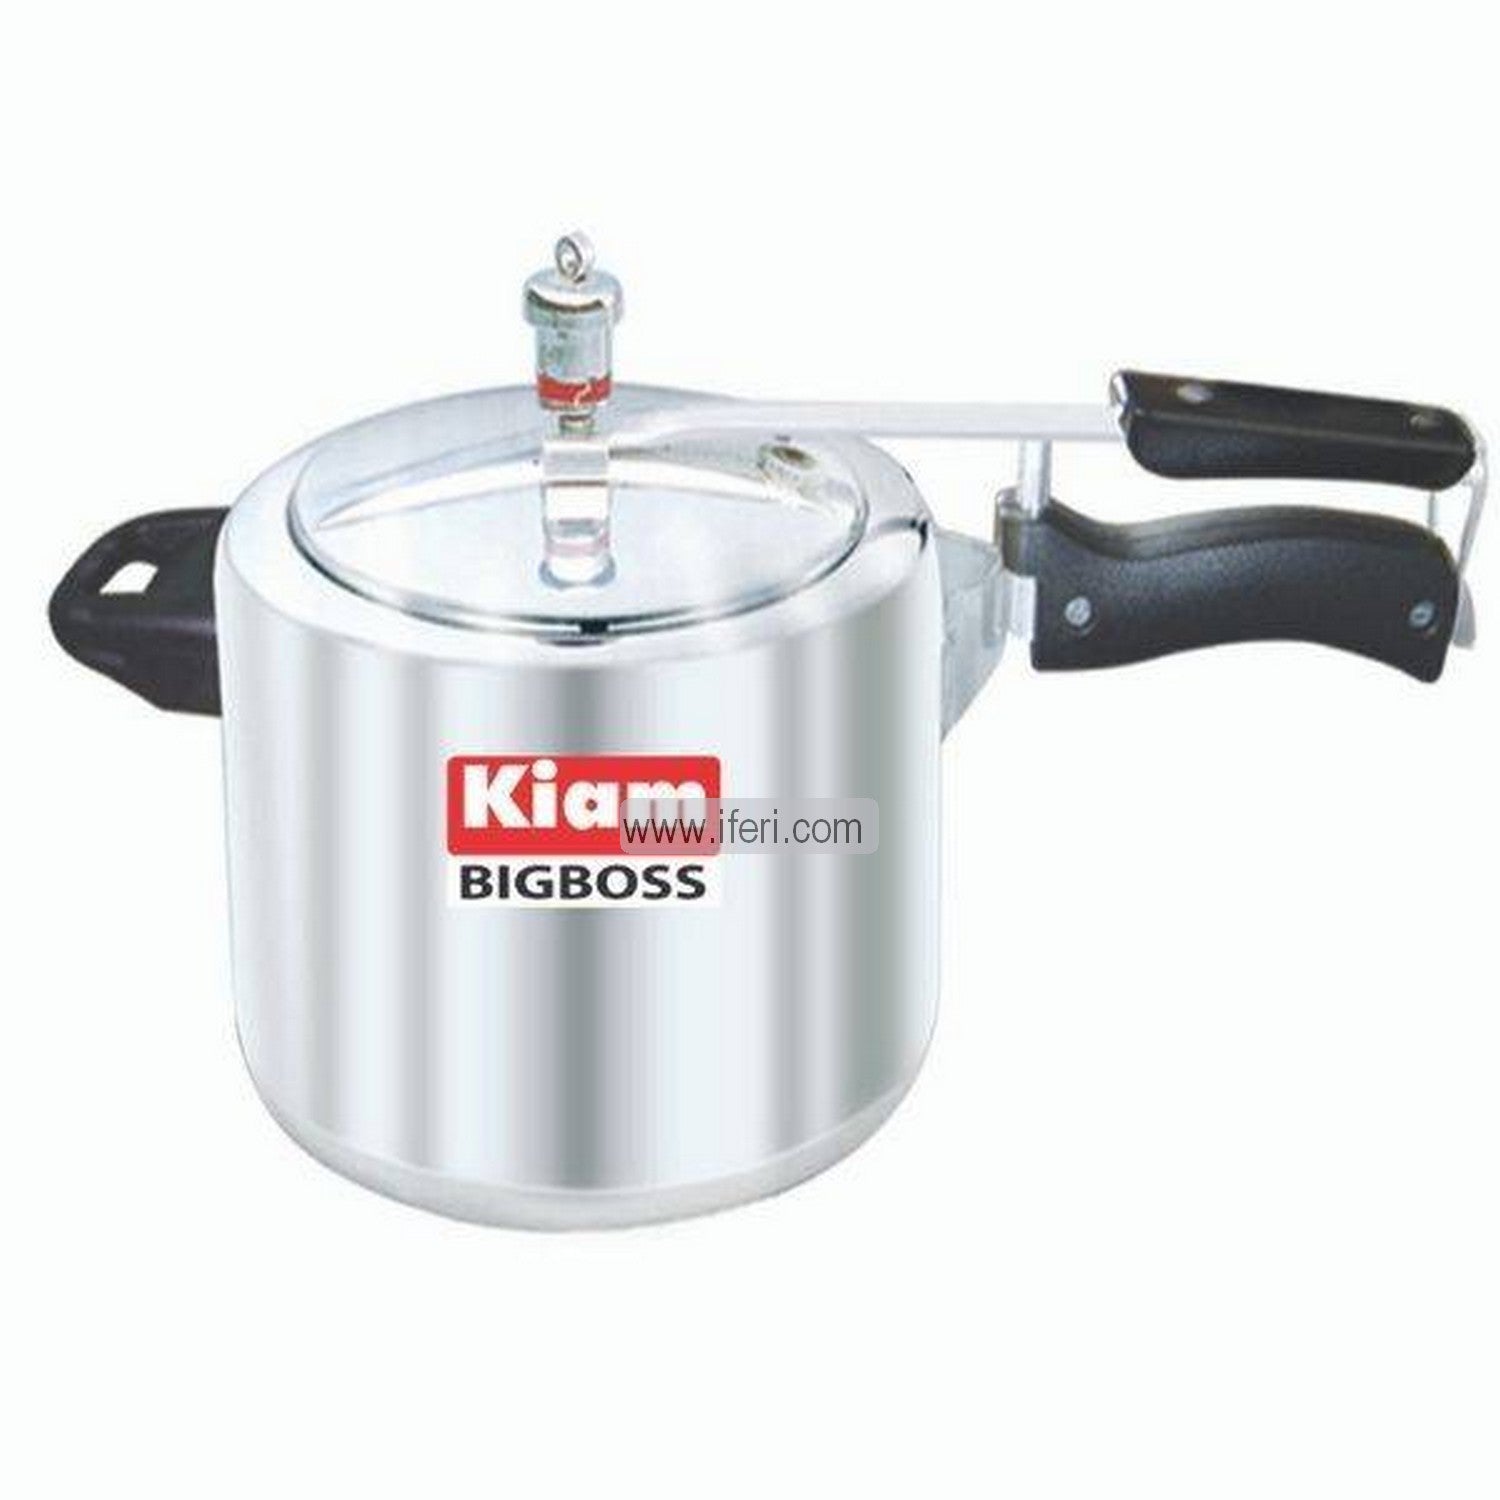 12.5 liter Kiam Classic pressure-cooker BCG3318